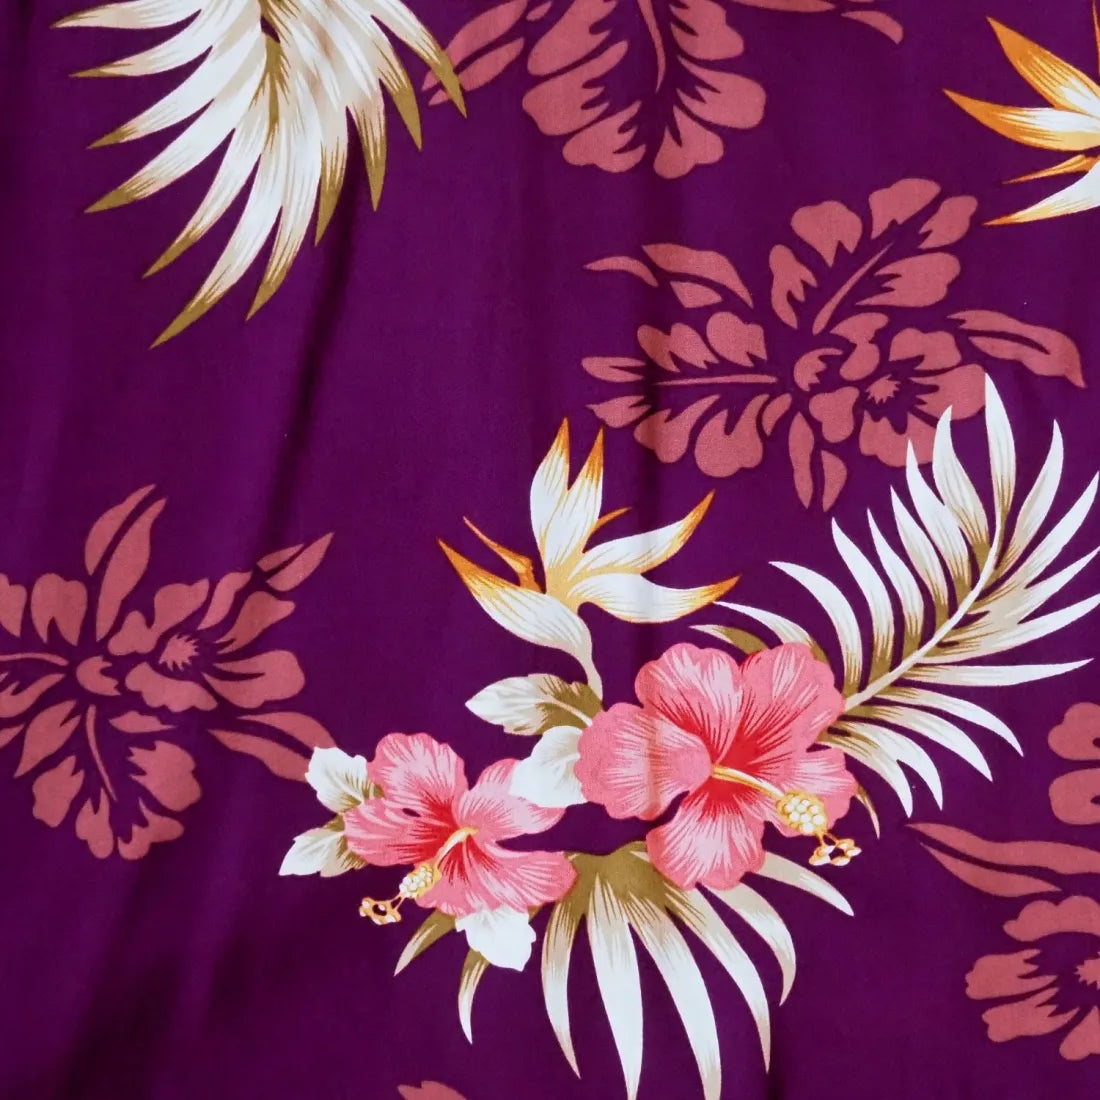 Passion Purple Hawaiian Rayon Shirt - Made In Hawaii